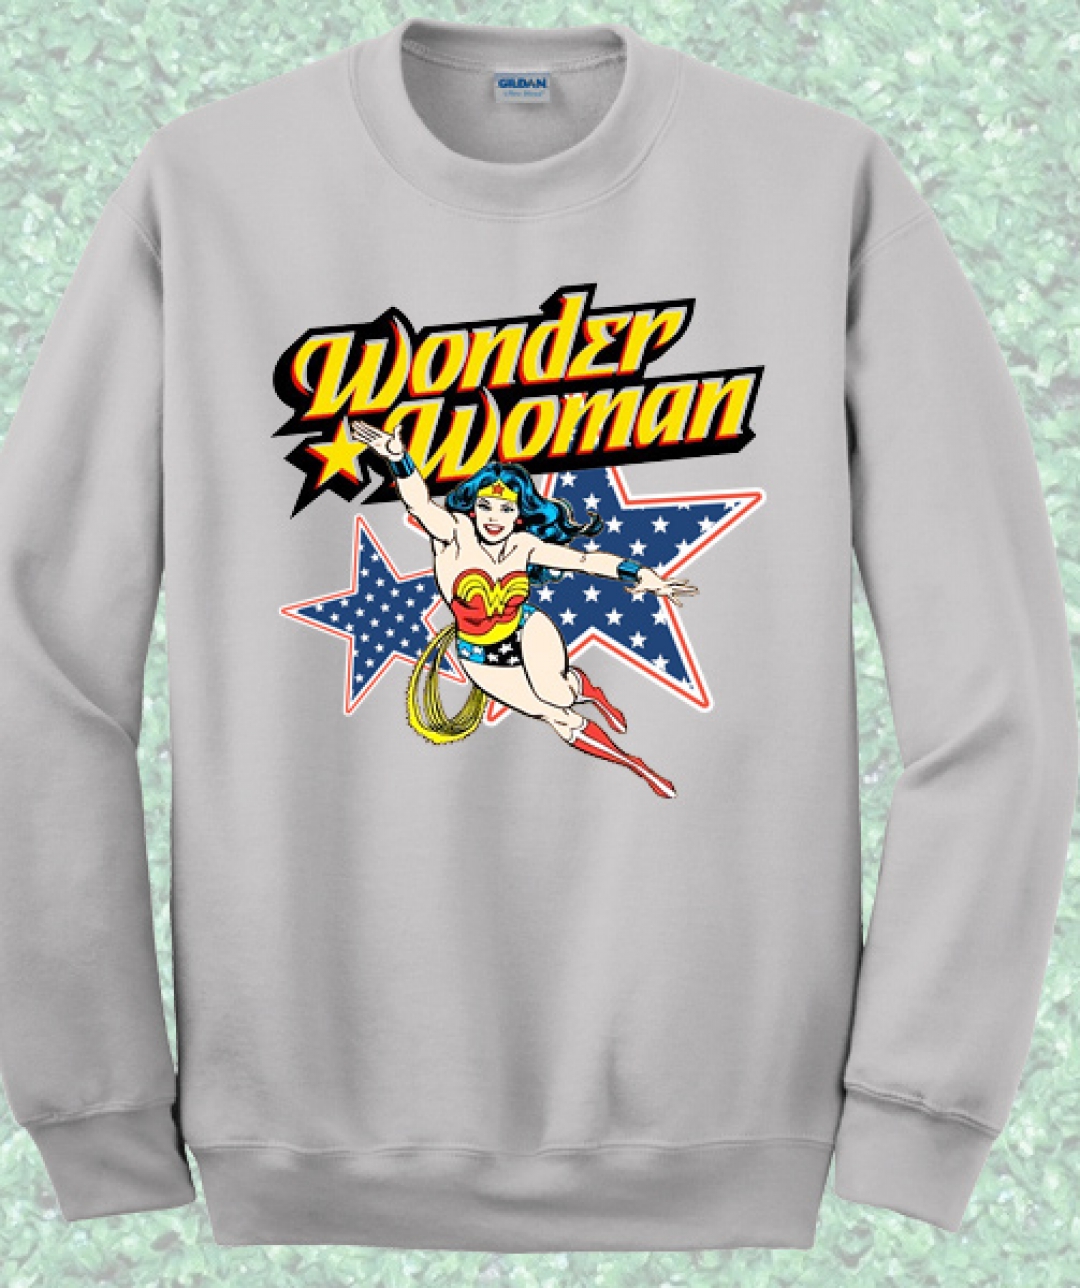 https://www.mpcteehouse.com/wp-content/uploads/2016/06/Wonder-Woman-Action-Sweatshirt-1080x1288.jpg